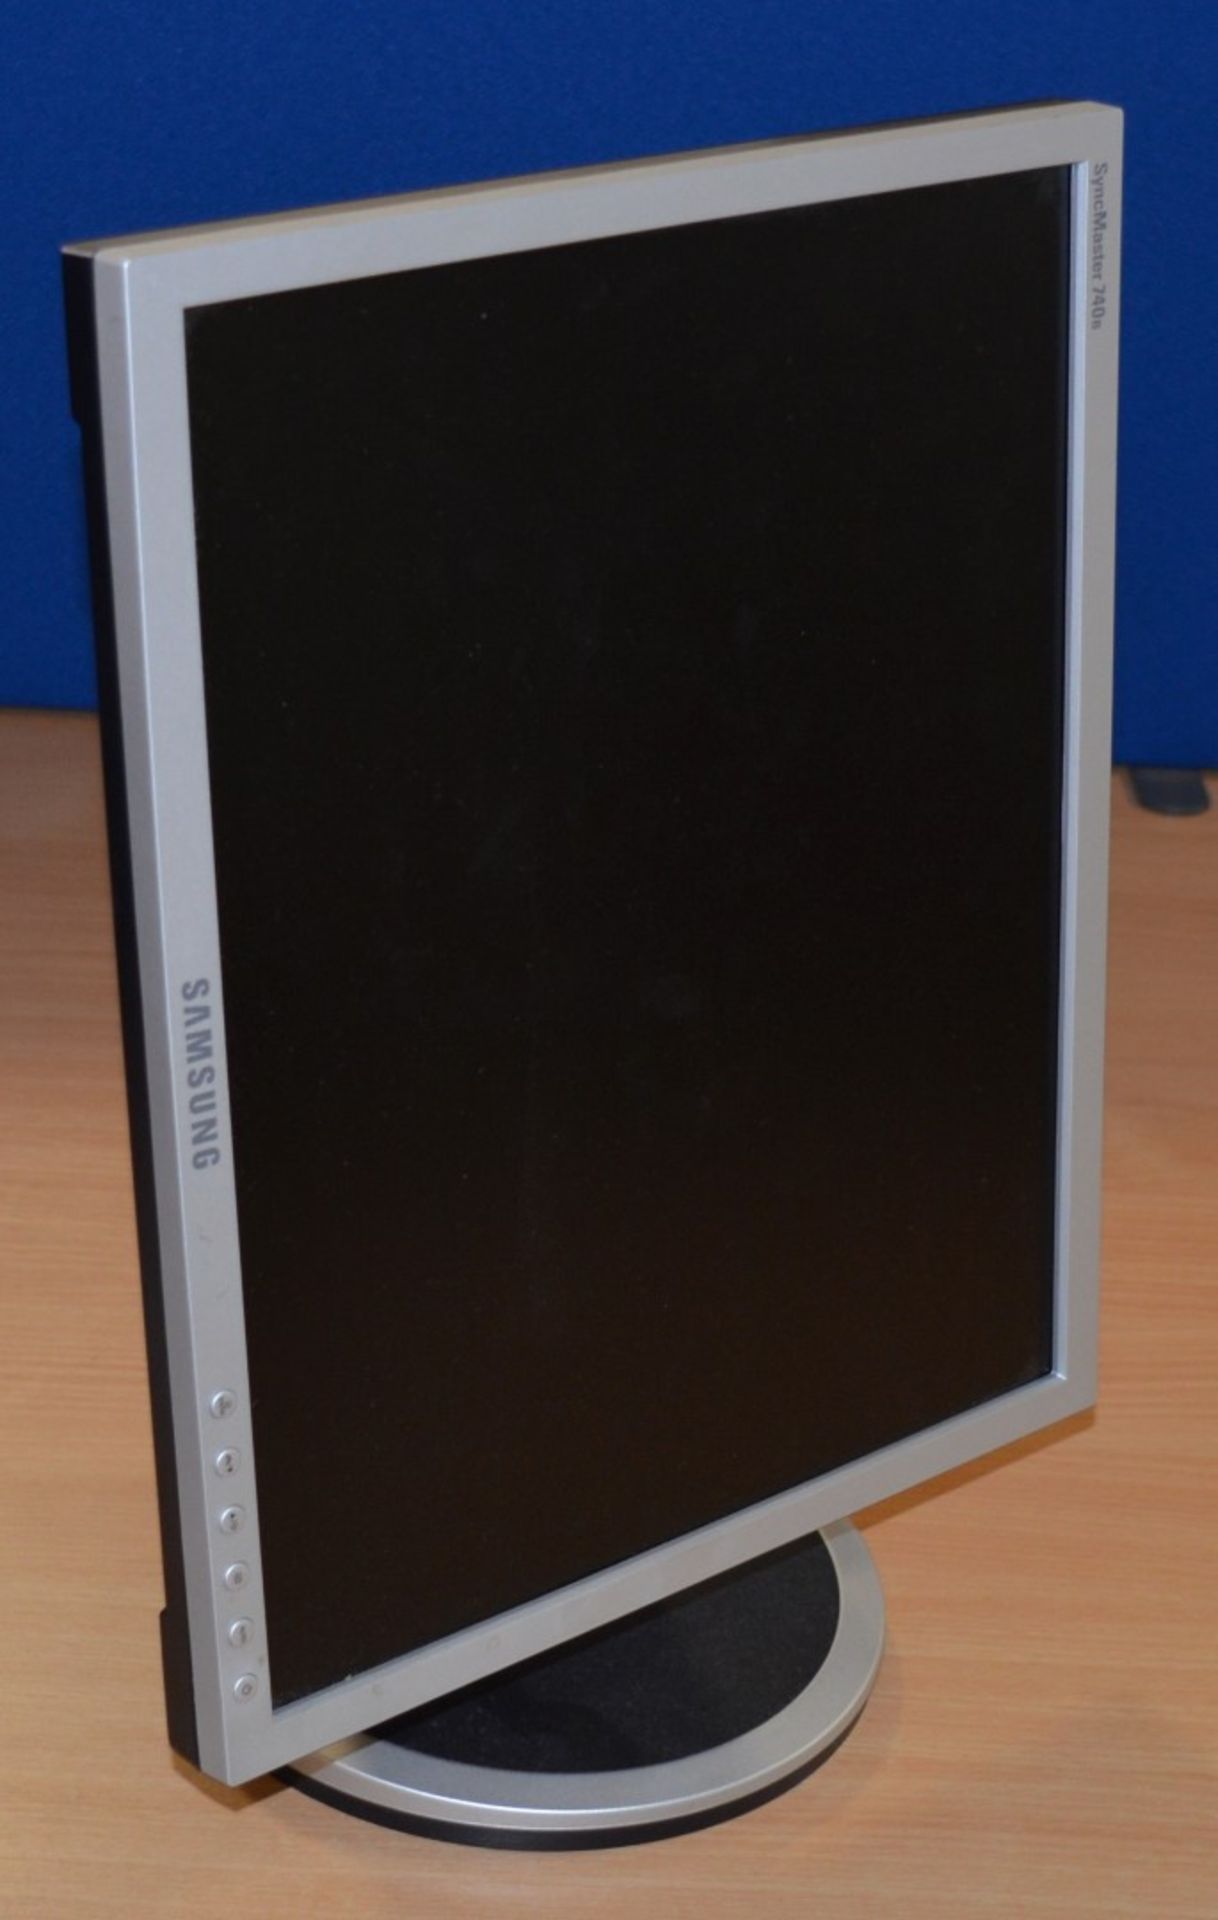 1 x Samsung Syncmaster 740B Flatscreen LCD Monitor - 17 Inch Screen Size - 1280 x 1024 Native - Image 4 of 6